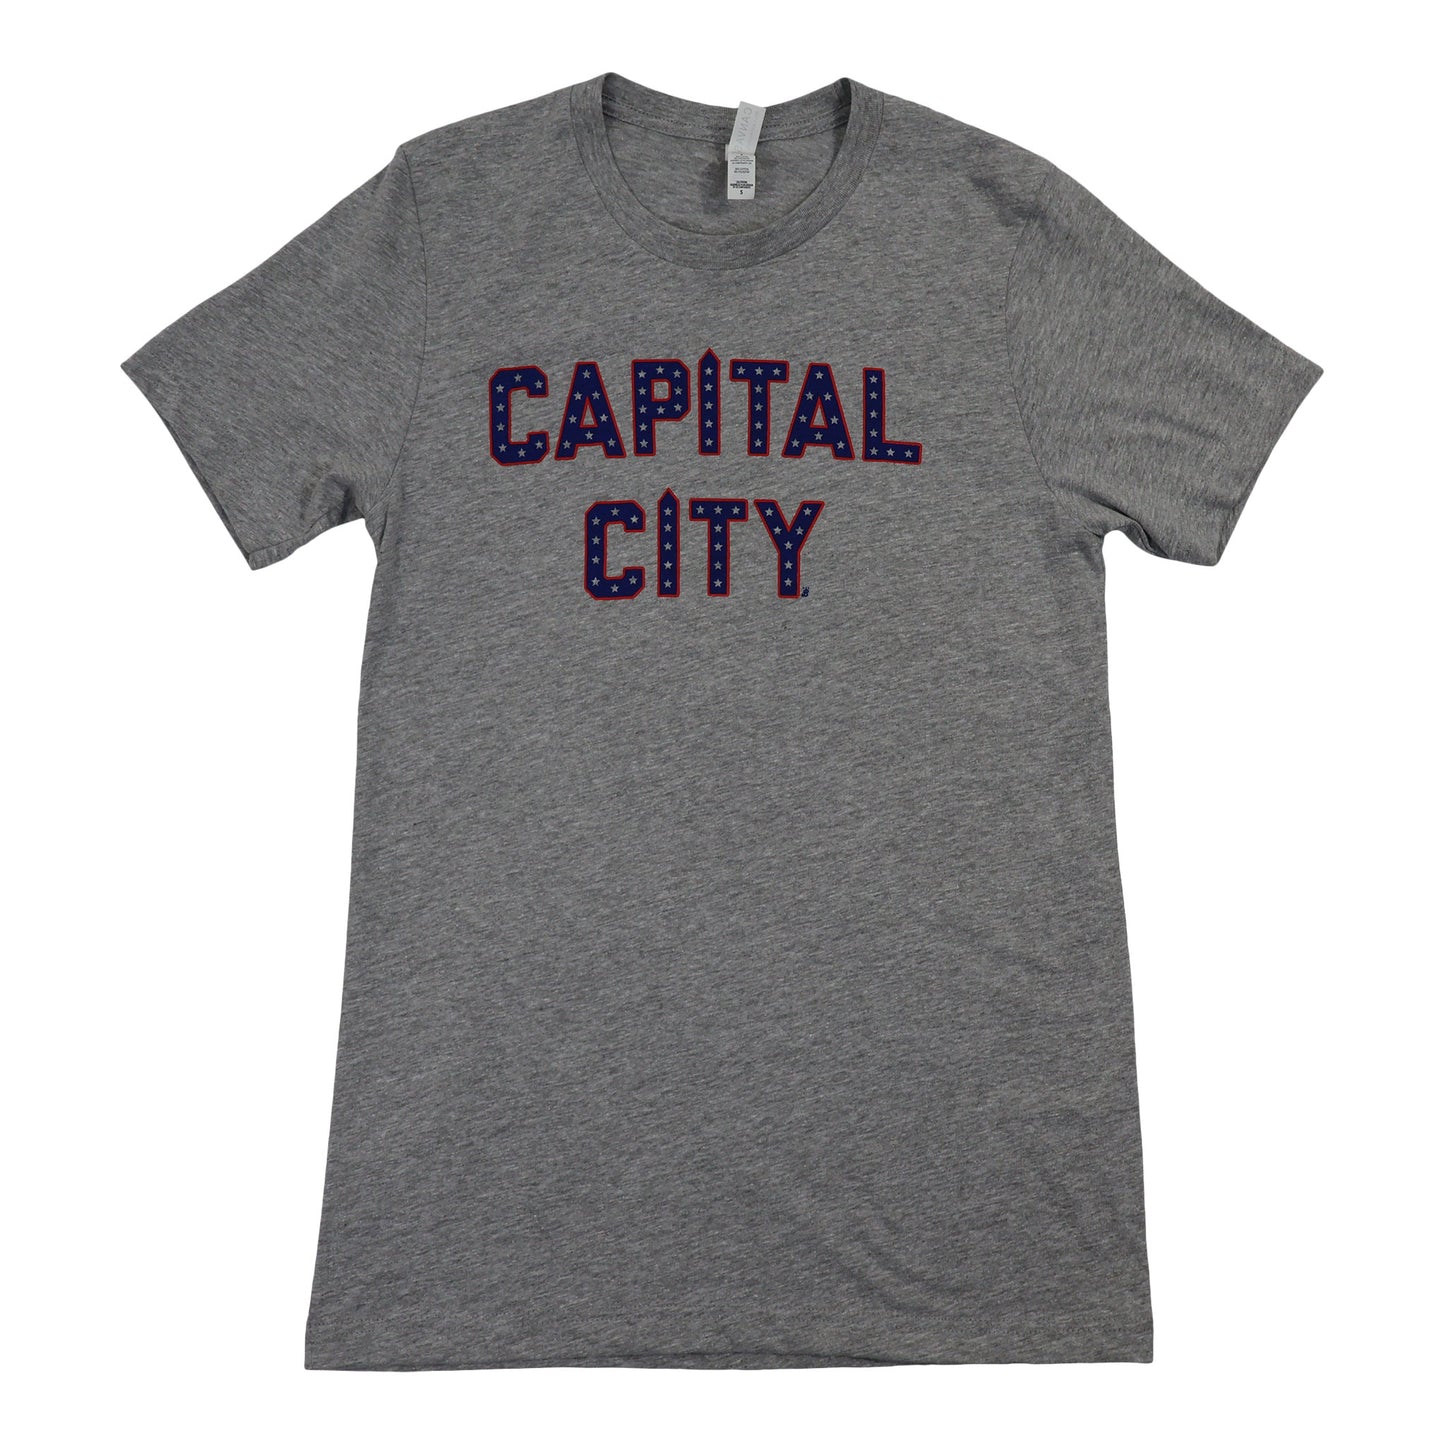 Unisex 'Capital City' T-shirt